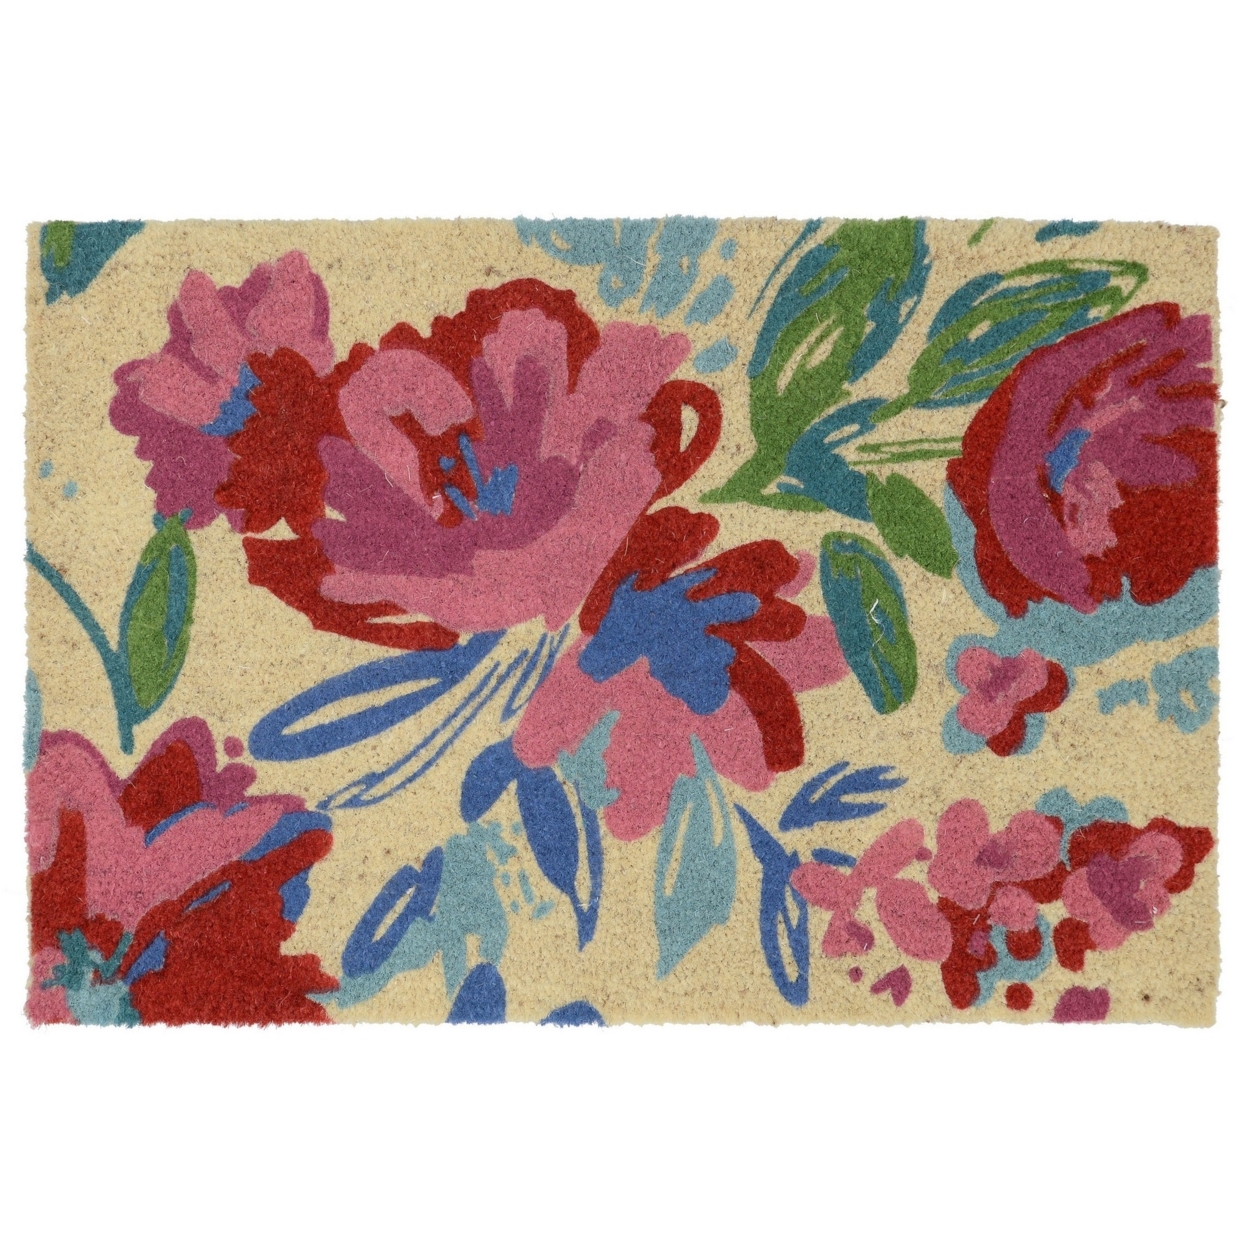 24 X 36 Machine Made Coir Doormat, Multicolor Floral Print, Ivory Base- Saltoro Sherpi